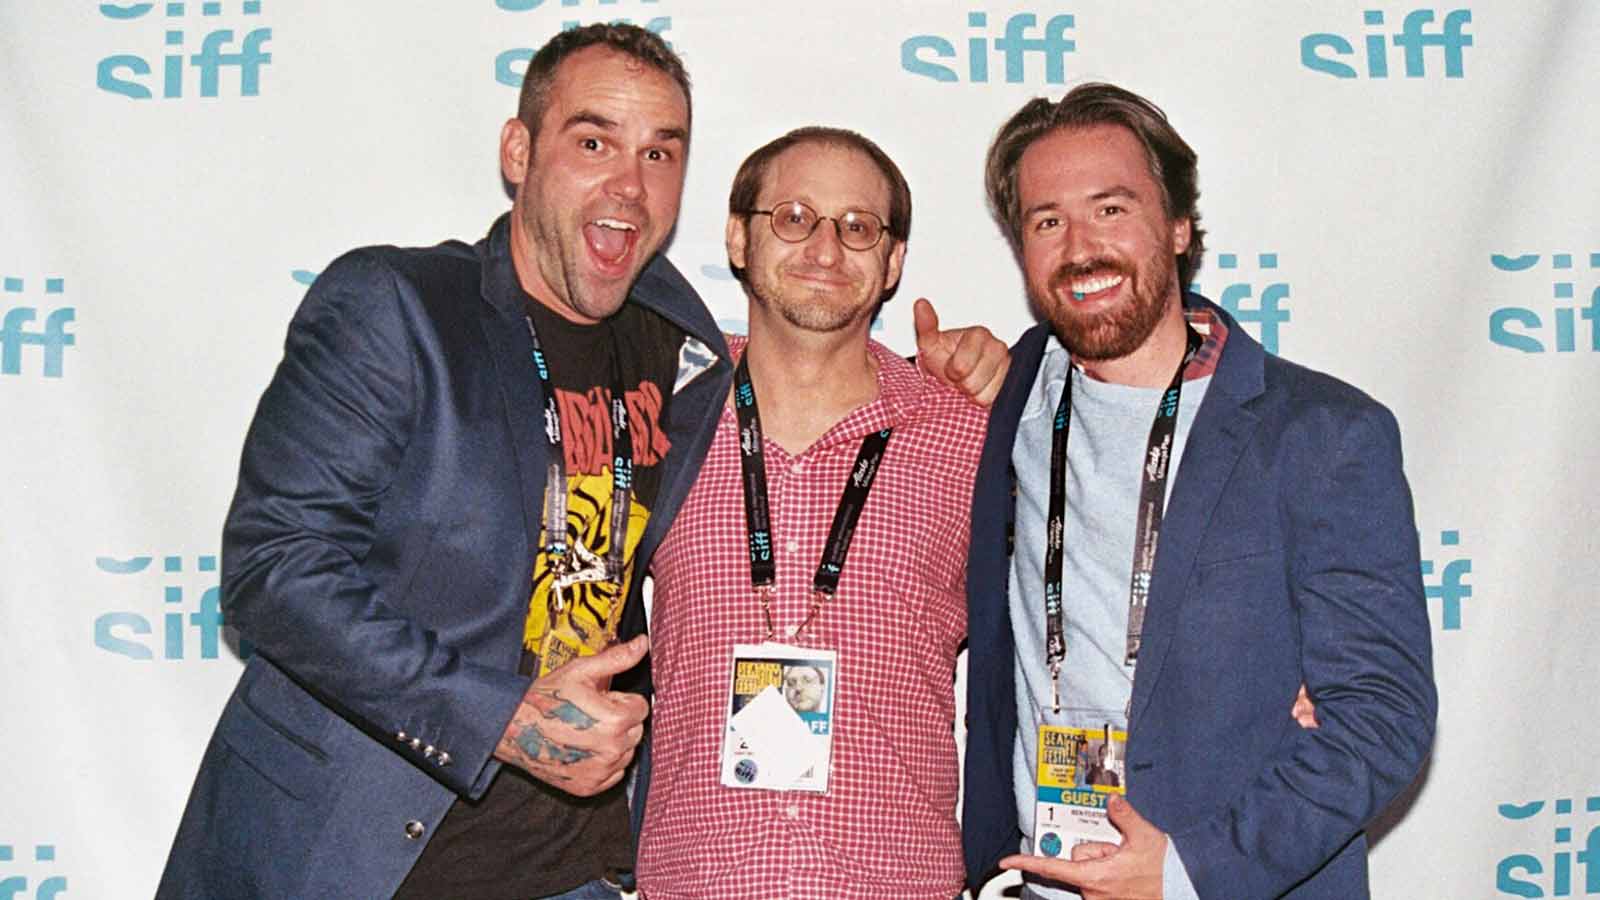 Left to right: Mark Dennis (Director), Dan Doody (SIFF Programmer), Ben Foster (Director)